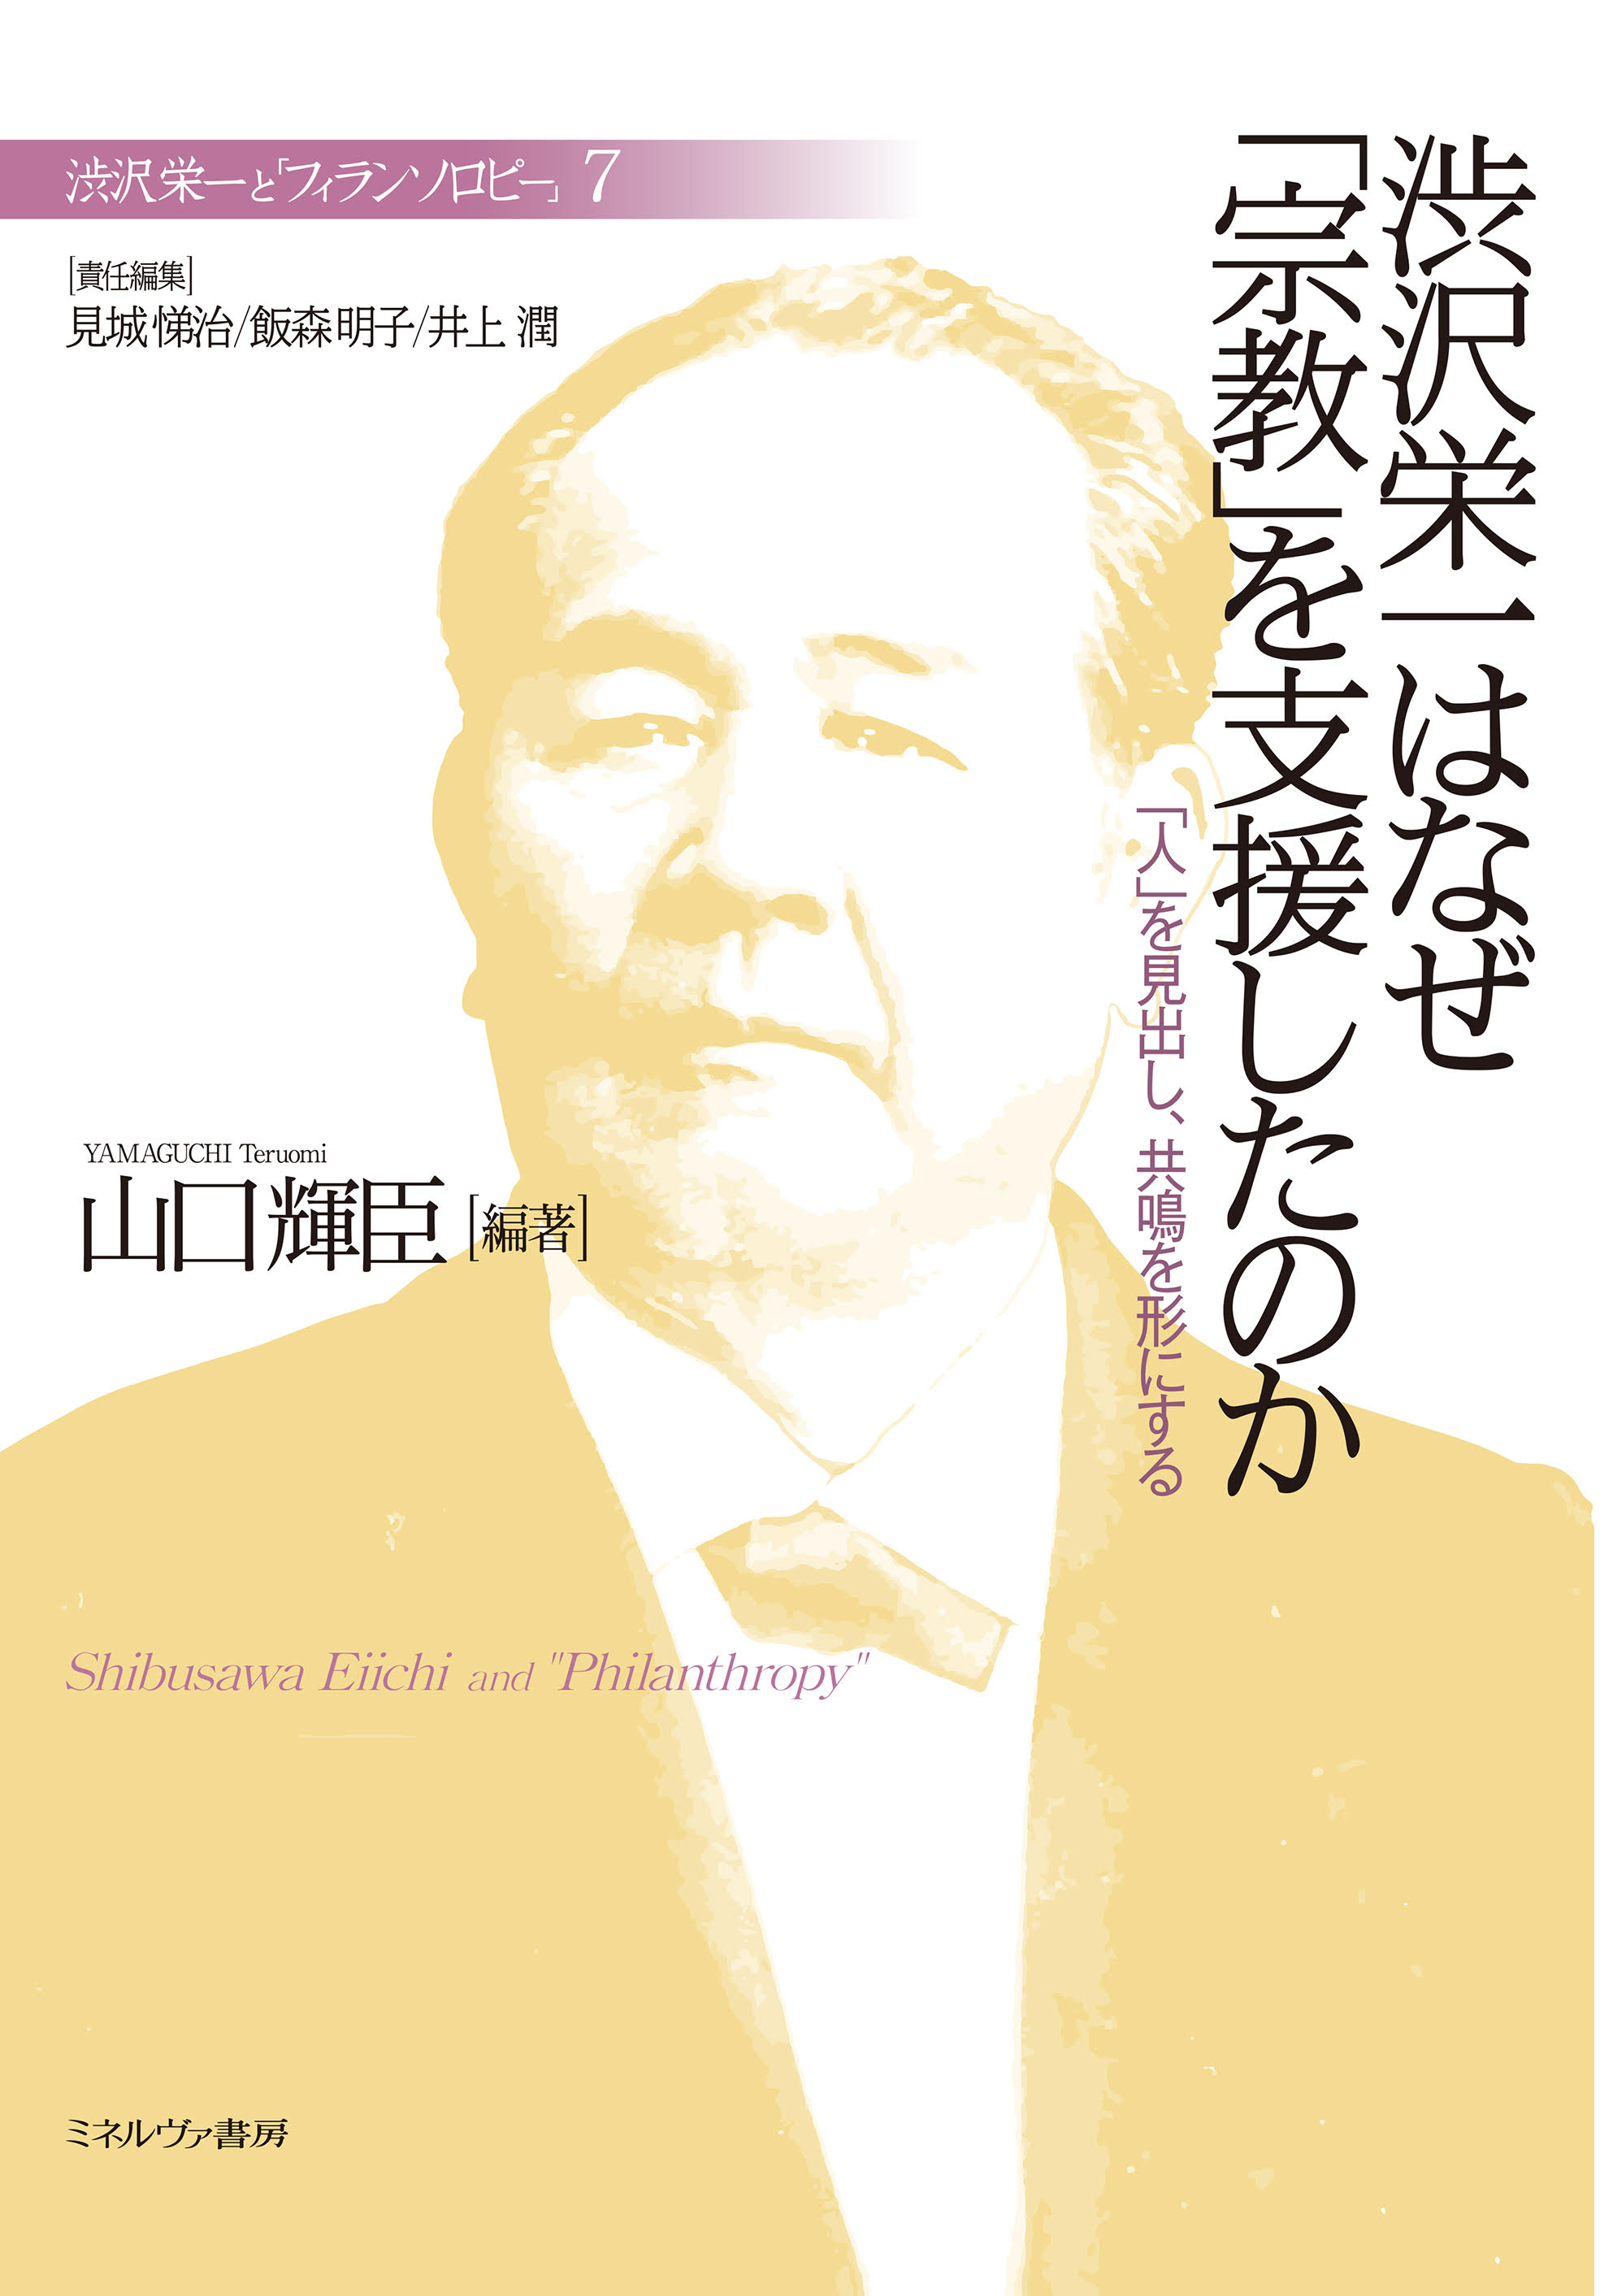 A portrait of Eiichi Shibusawa